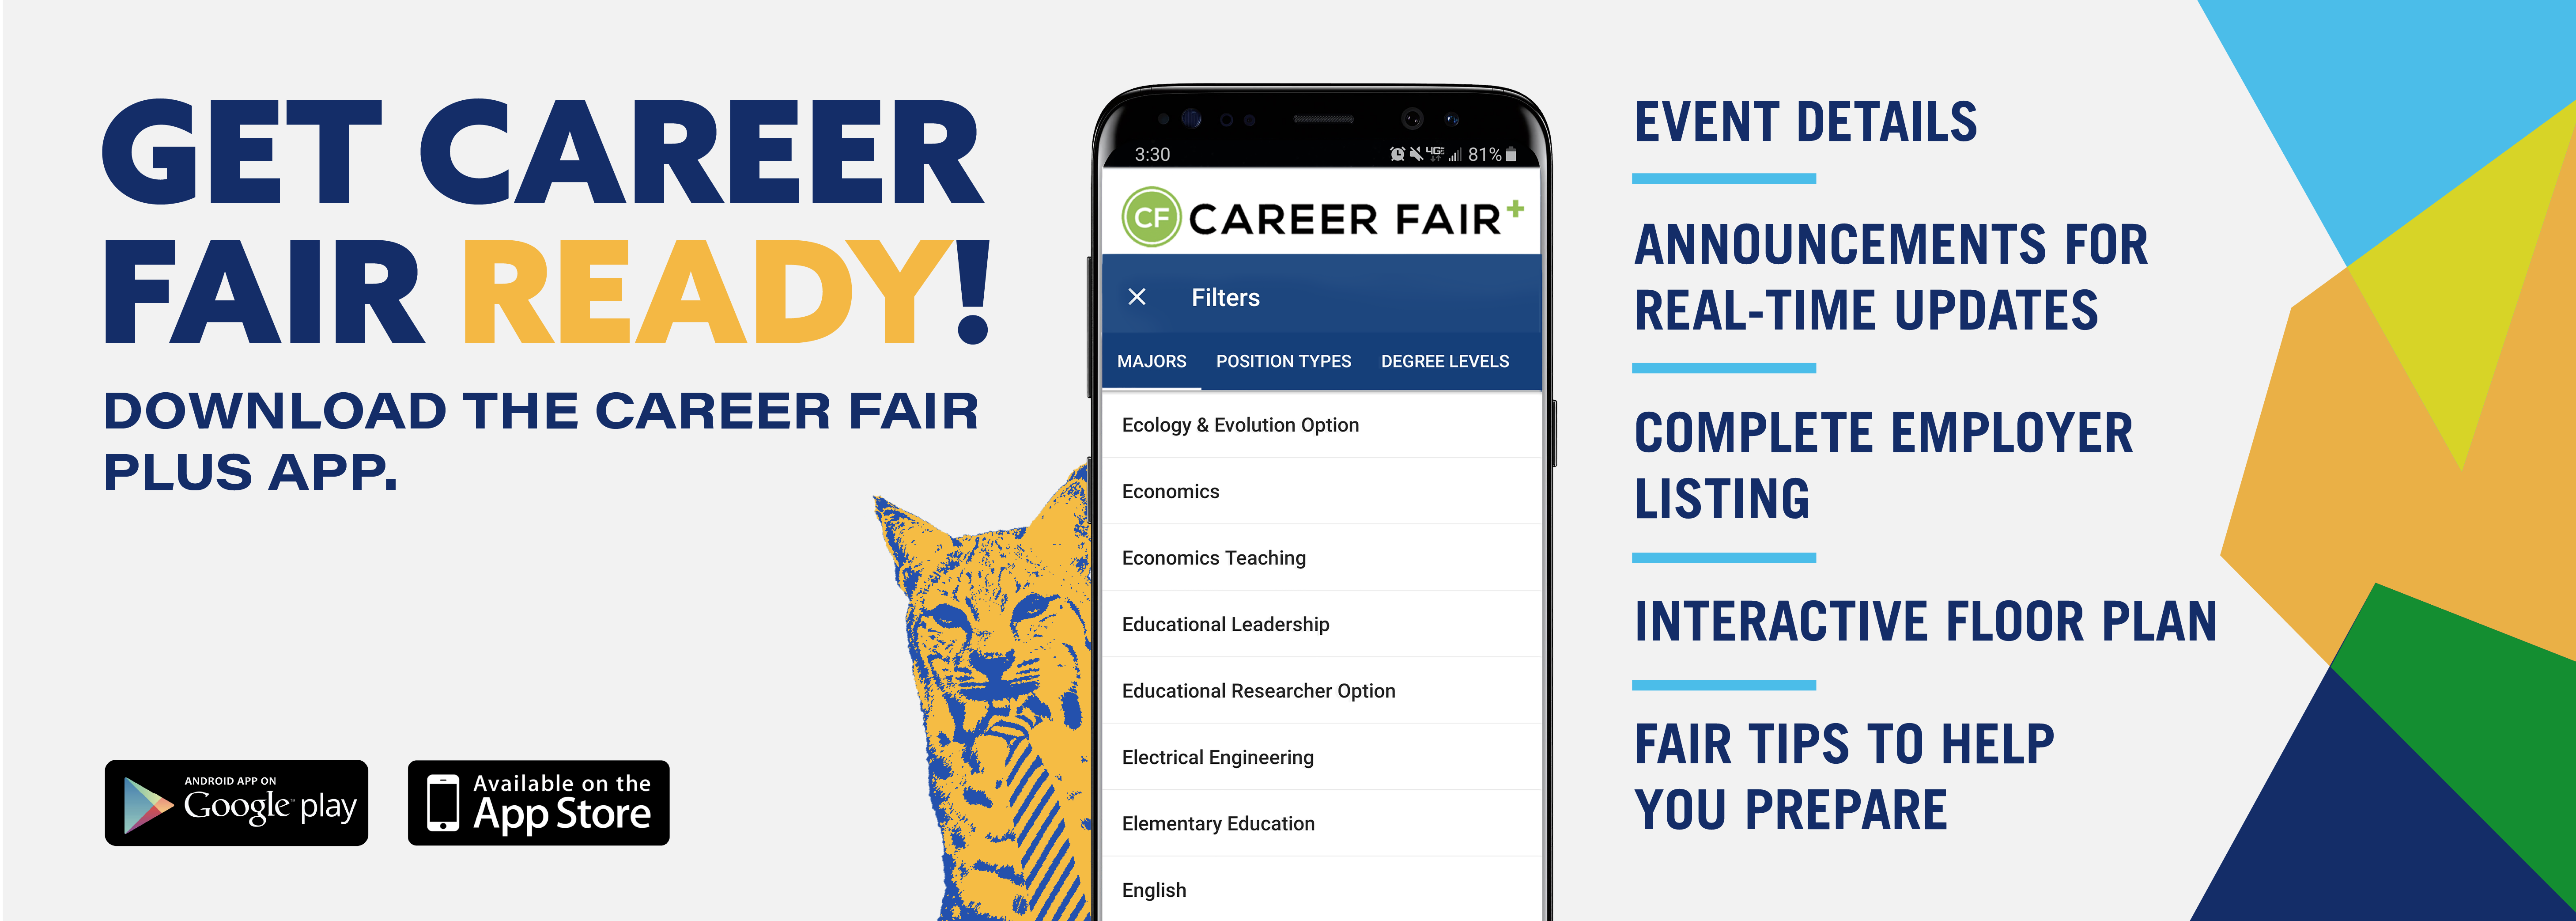 Career fair plus app